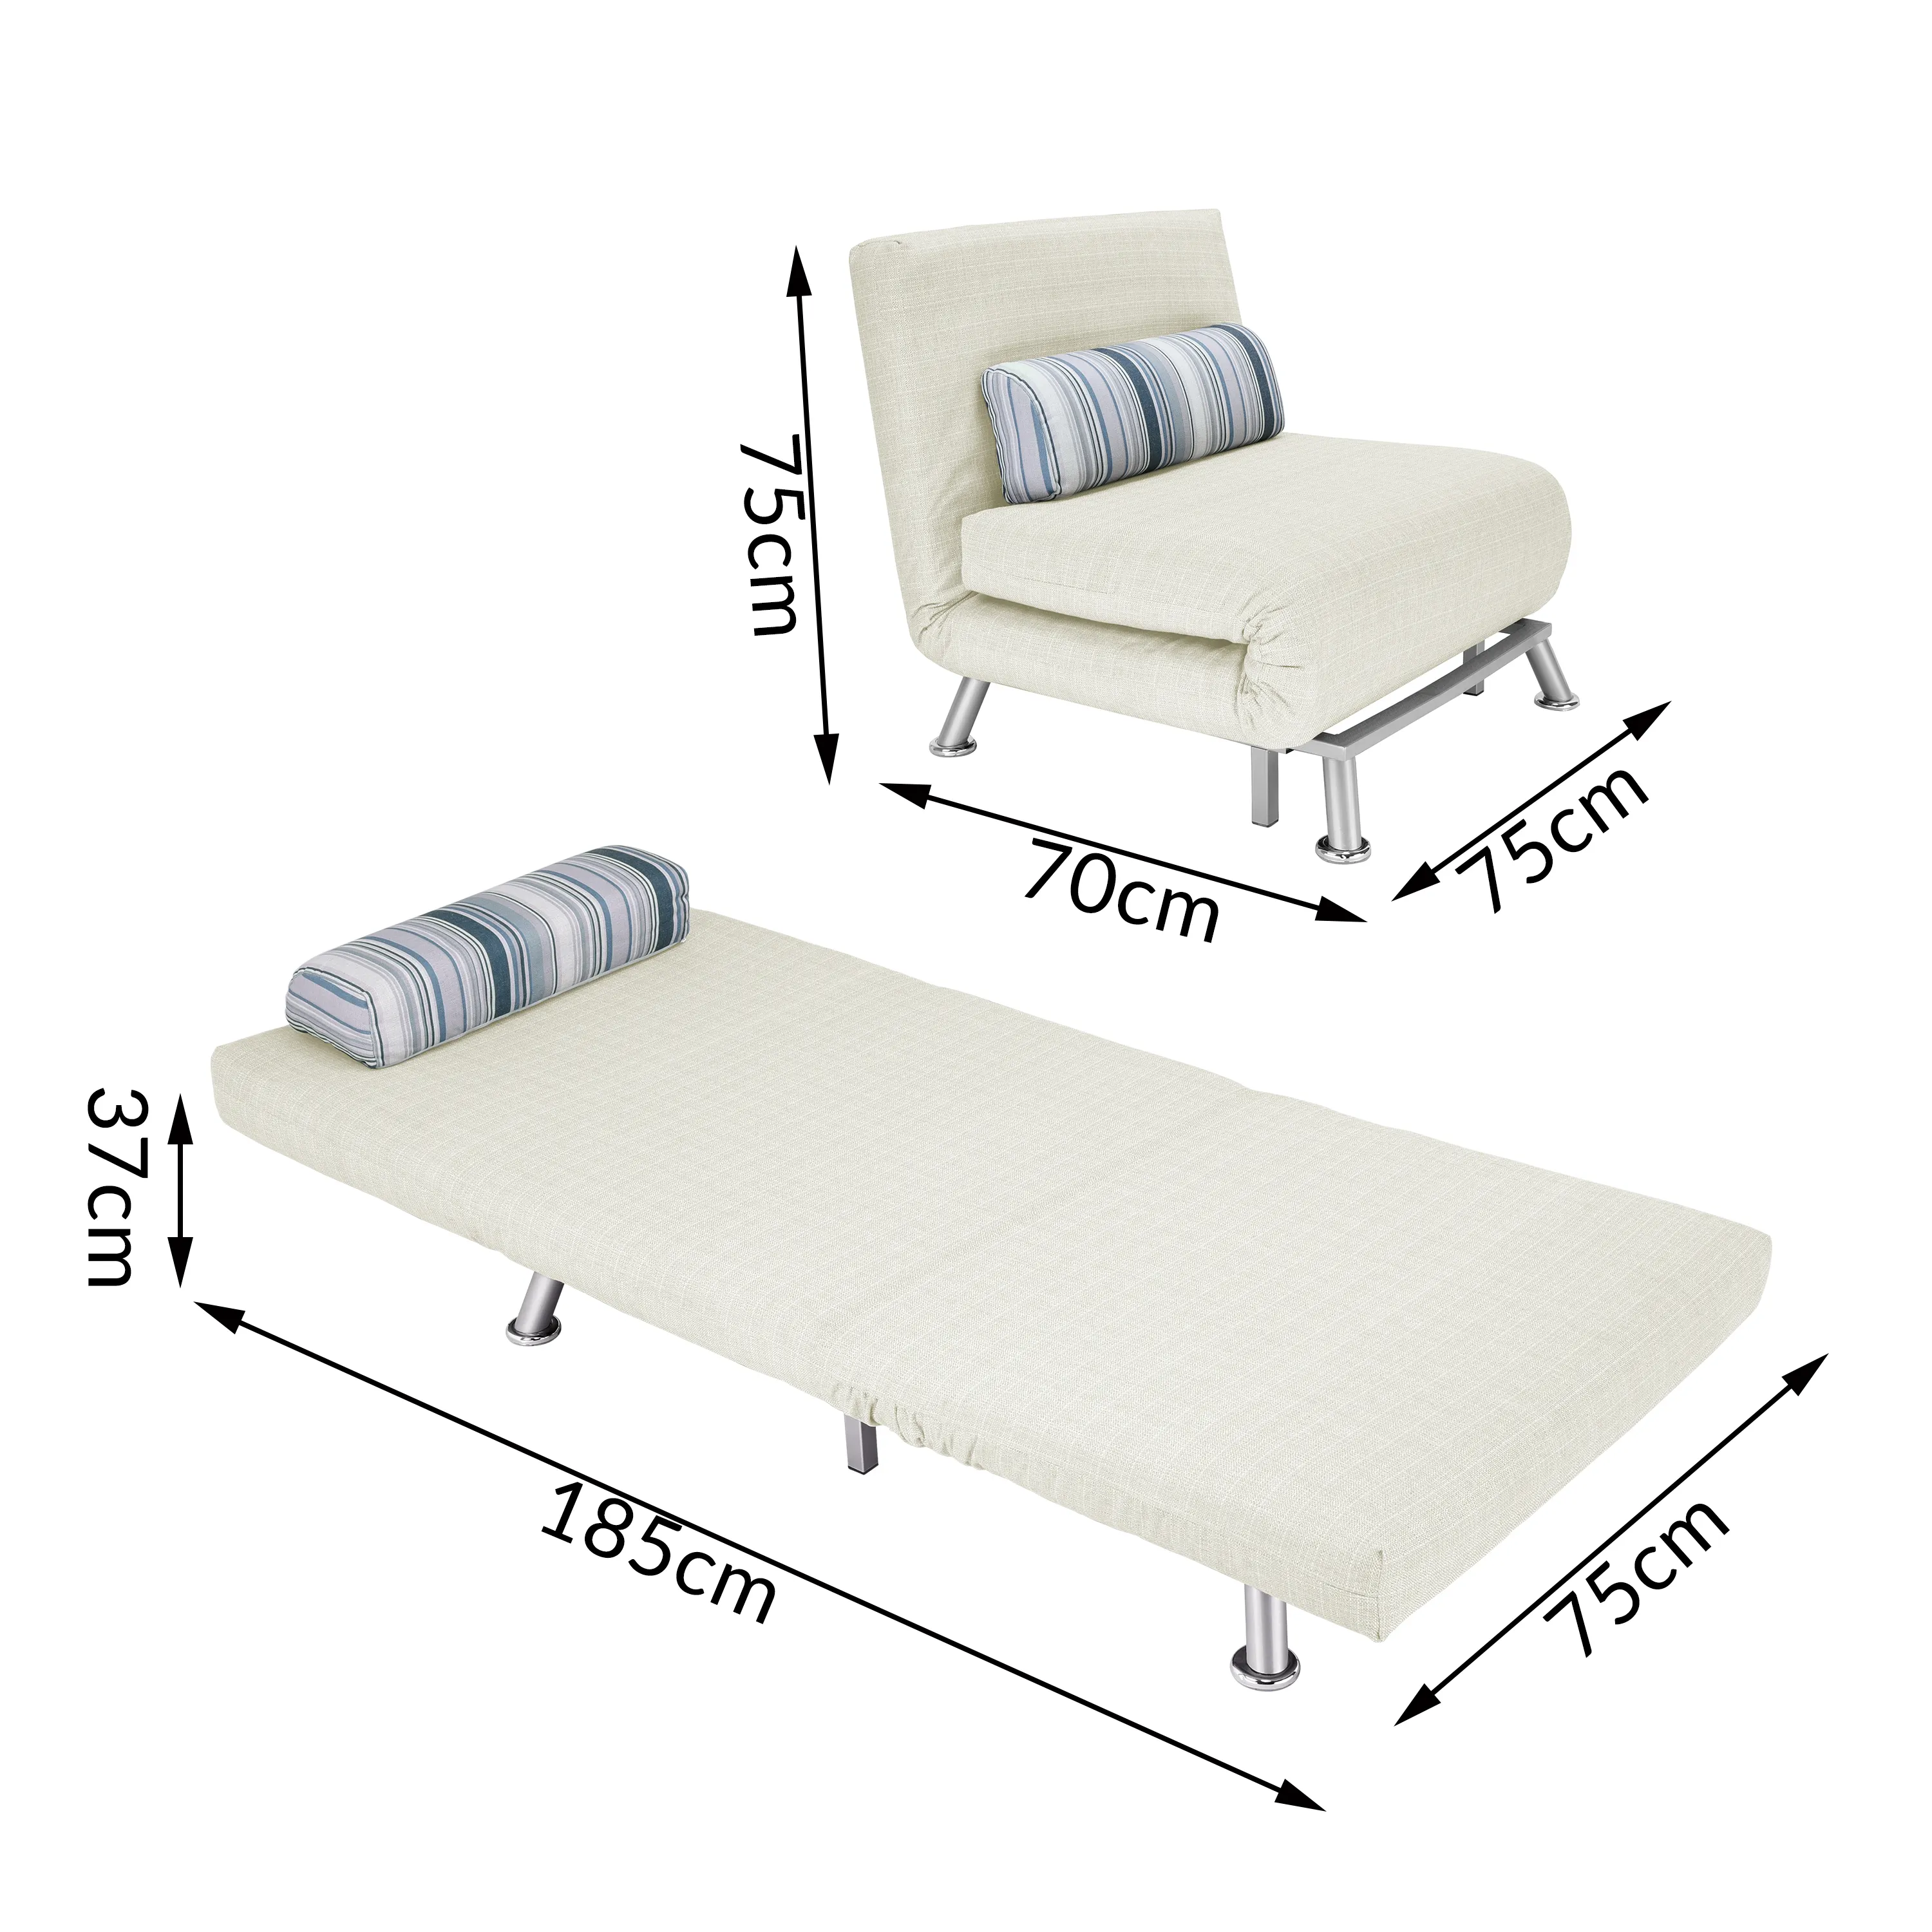 Sofá cama plegable con estructura de Metal, sillón de tela tapizada, cama individual plegable, color gris Crema para sala de estar/dormitorio